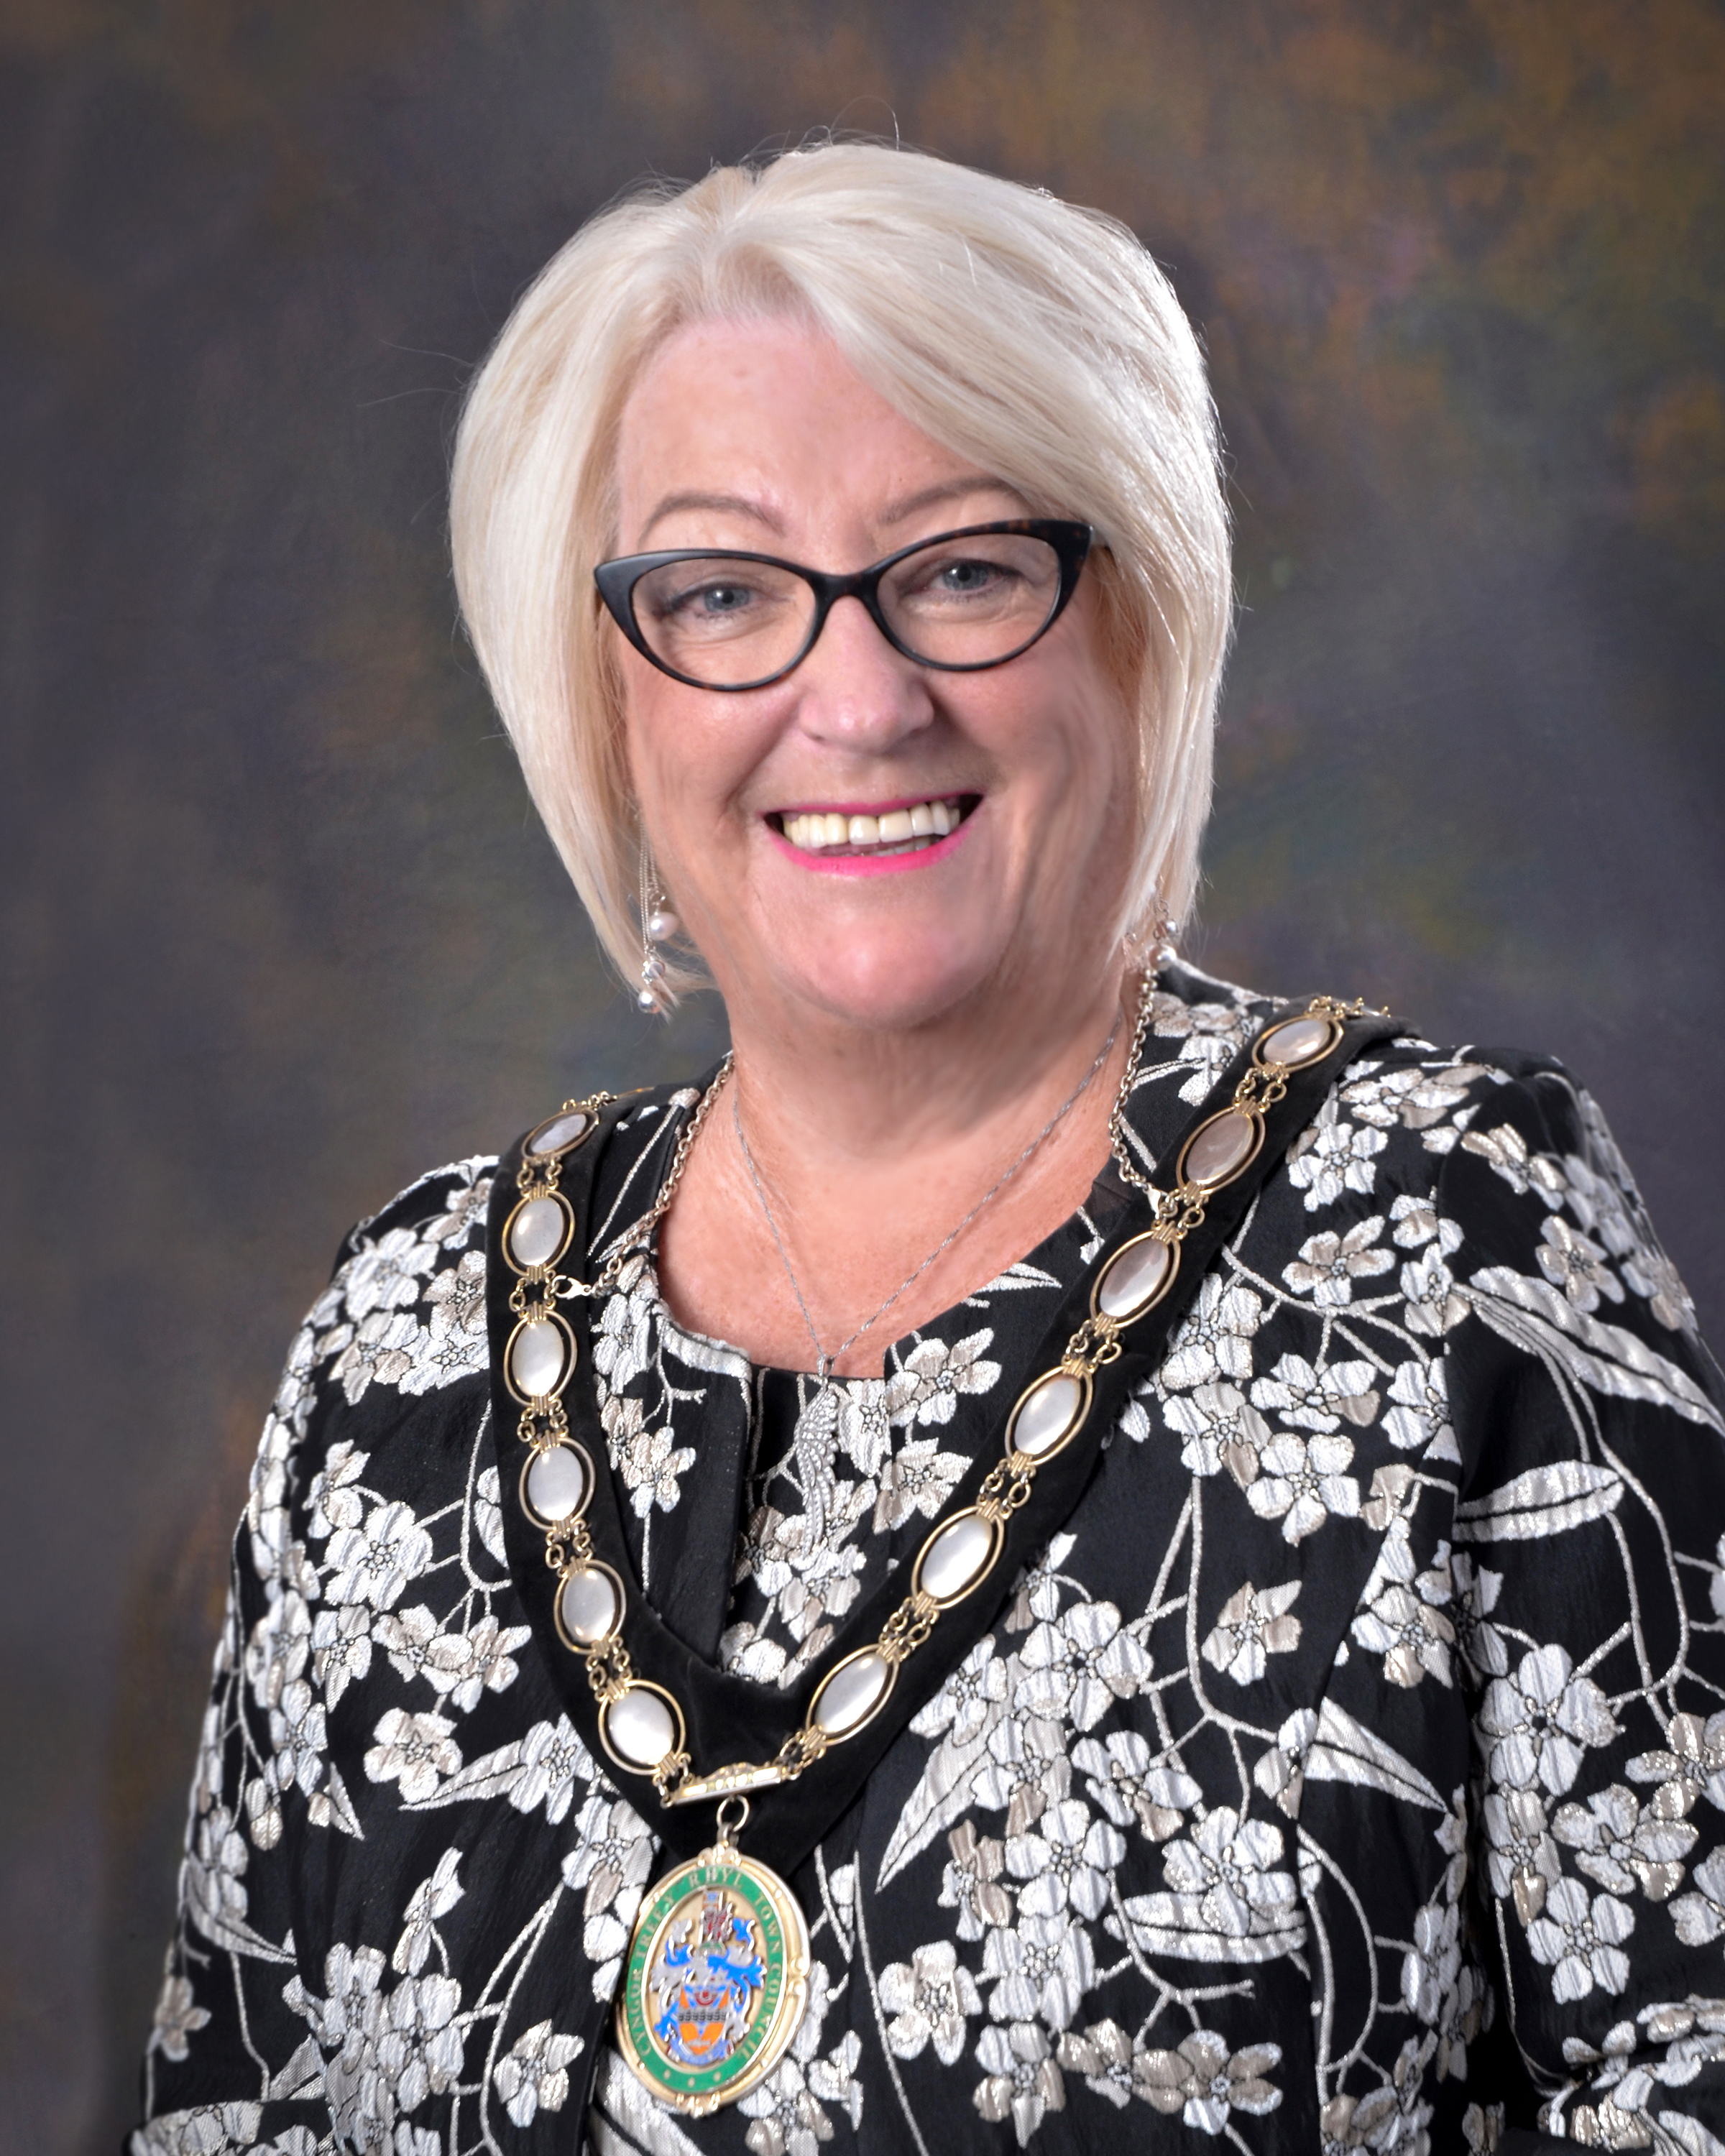 Diane King, mayor of Rhyl